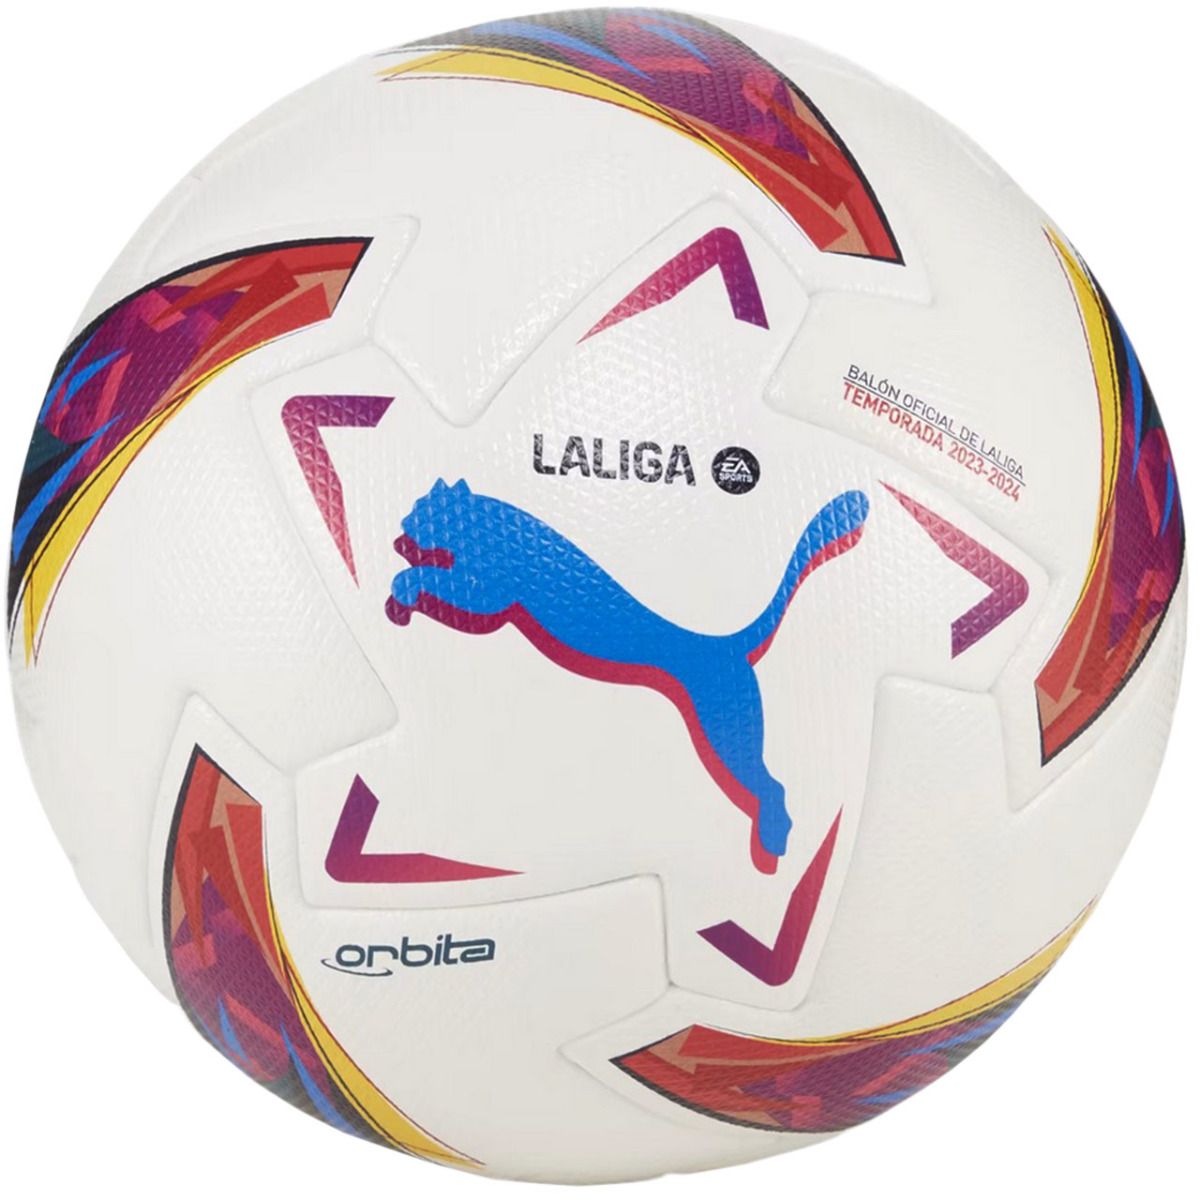 PUMA Fotbalový míč Orbita LaLiga 1 FIFA Quality 84106 01